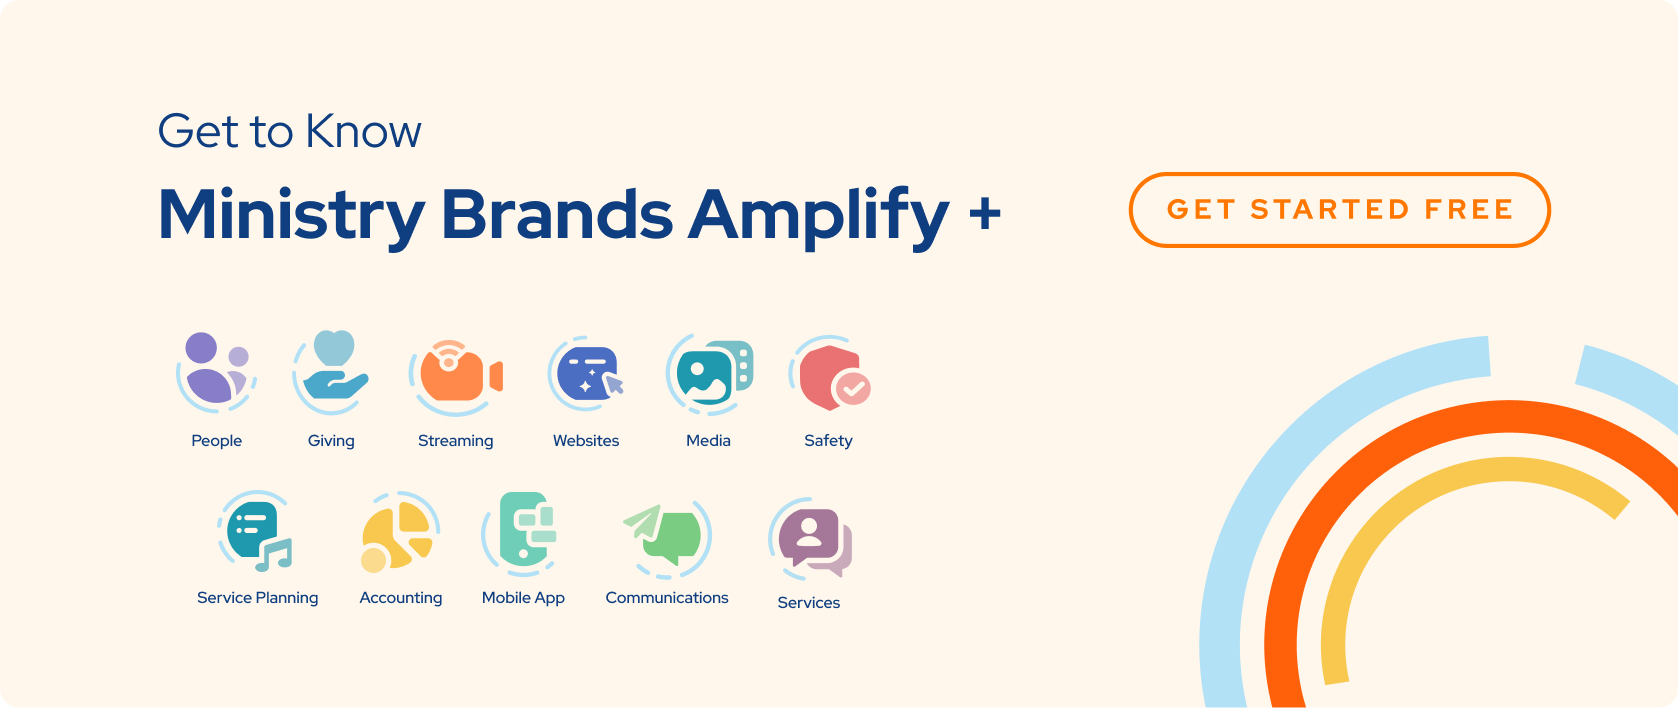 Ministry Brands Amplify +